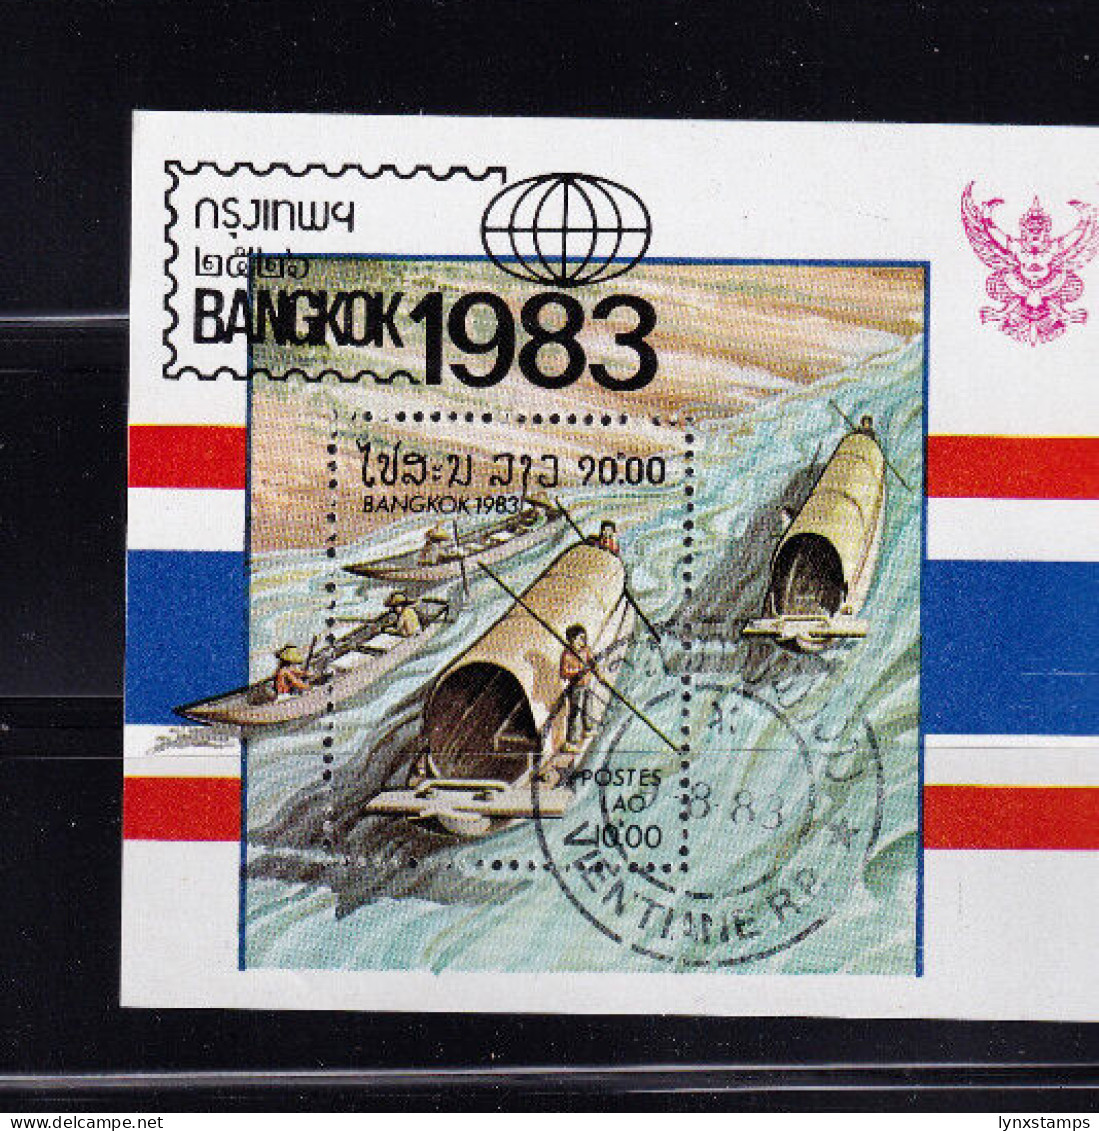 LI06 Laos 1983 International Stamp Exhibition "Bangkok '83" Used Mini Sheet - Laos